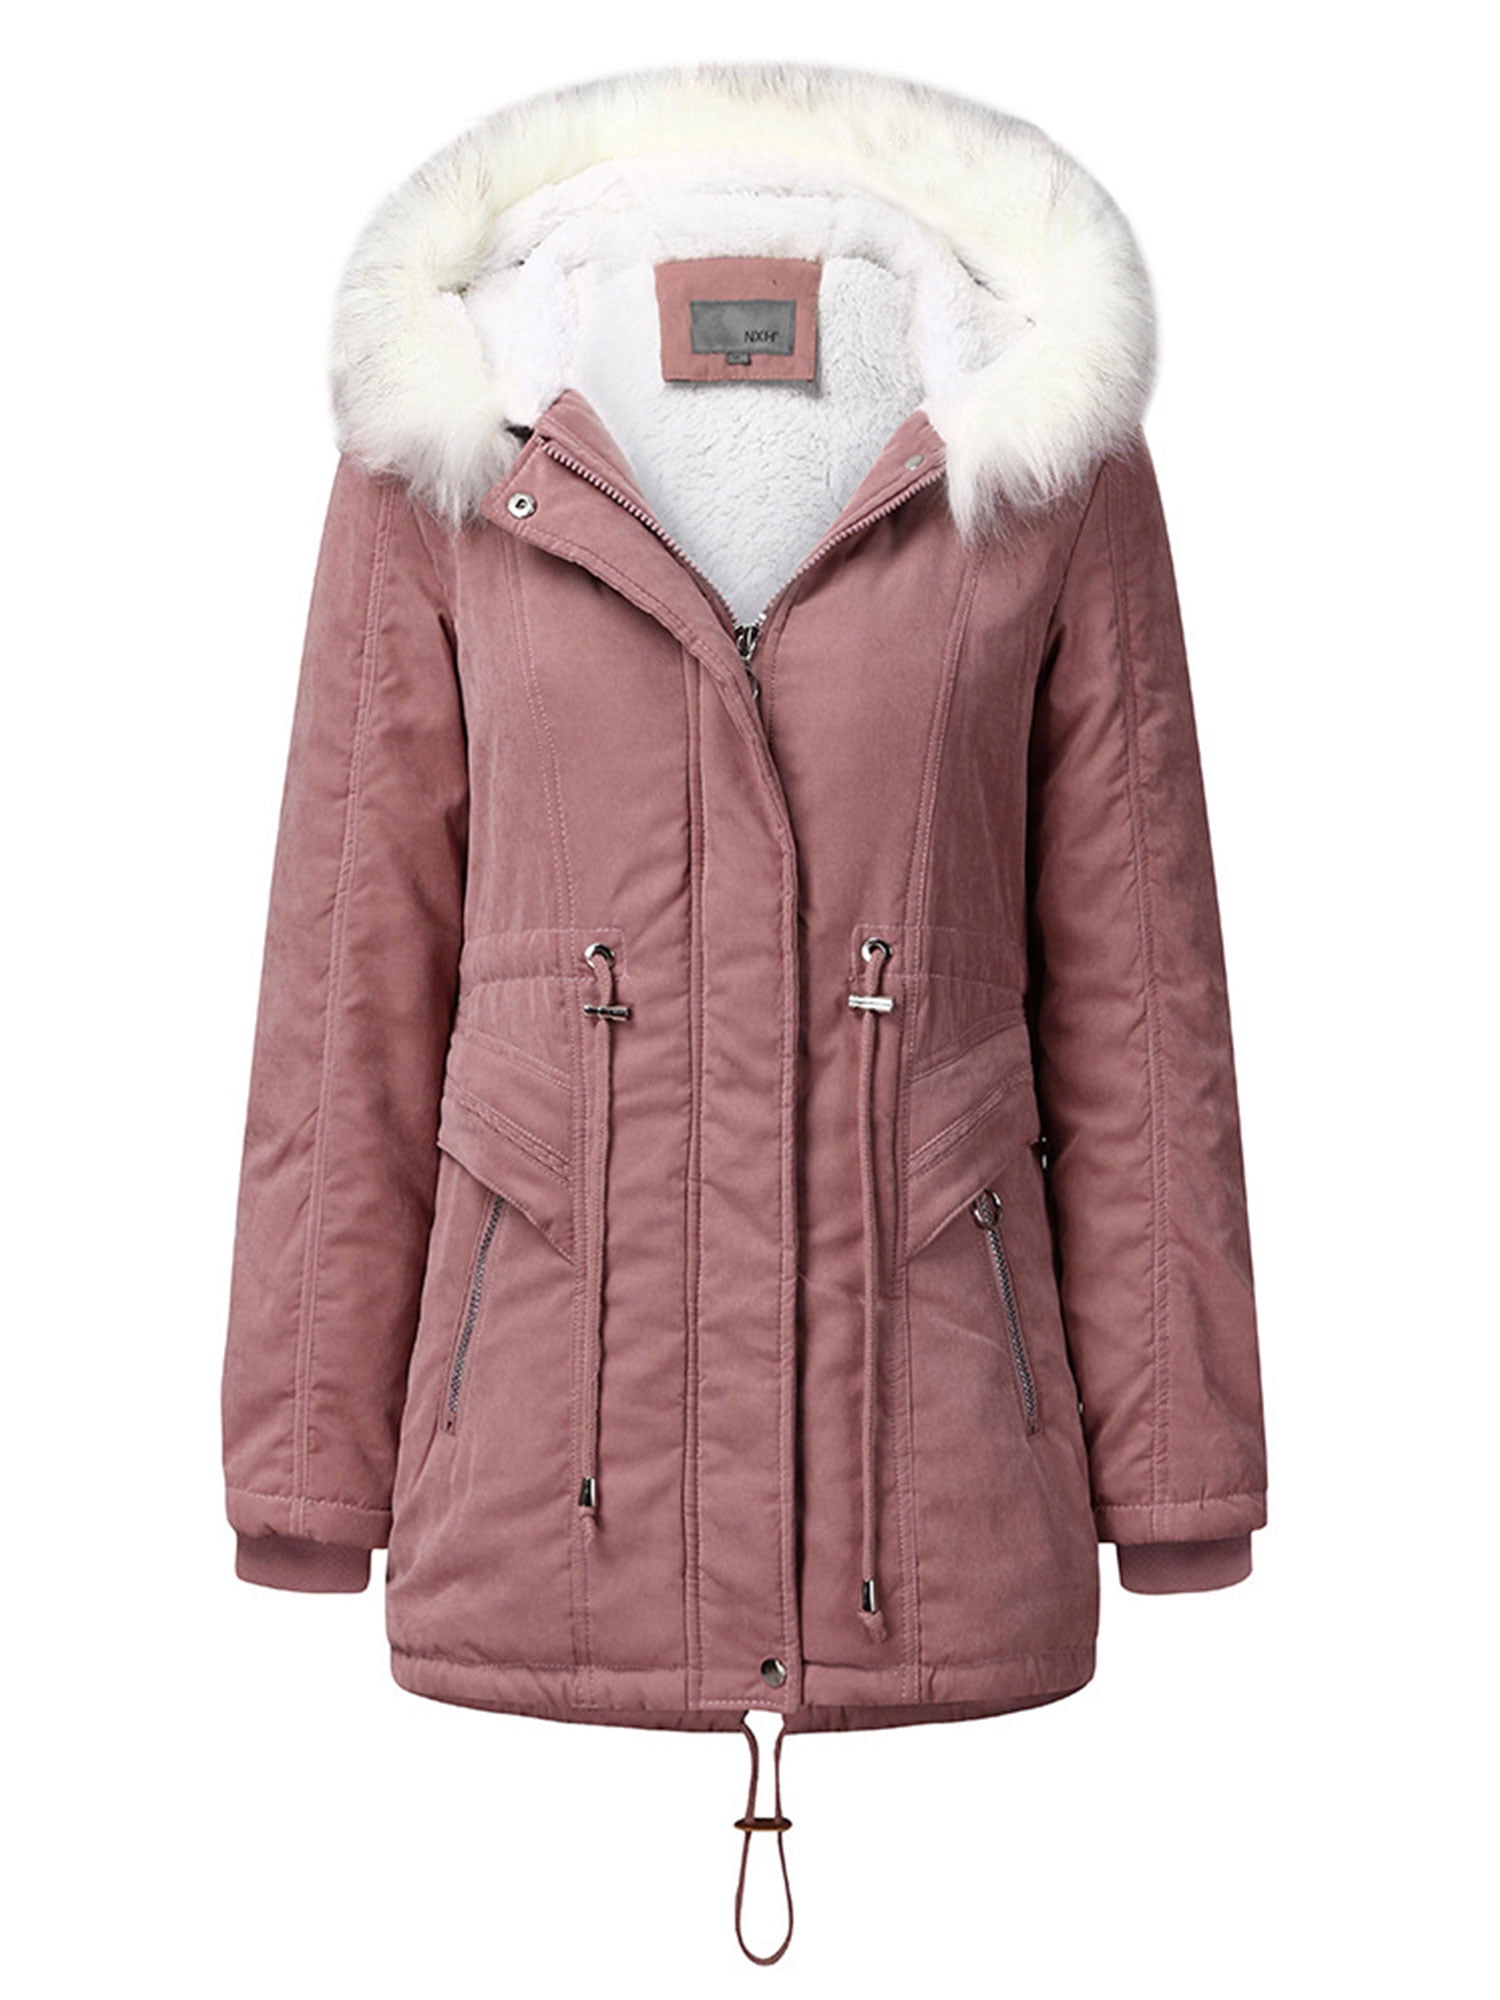 Padded Outwear Warm Coat Jacket Winter Hooded Overcoat Faux Fur Cotton Thicken